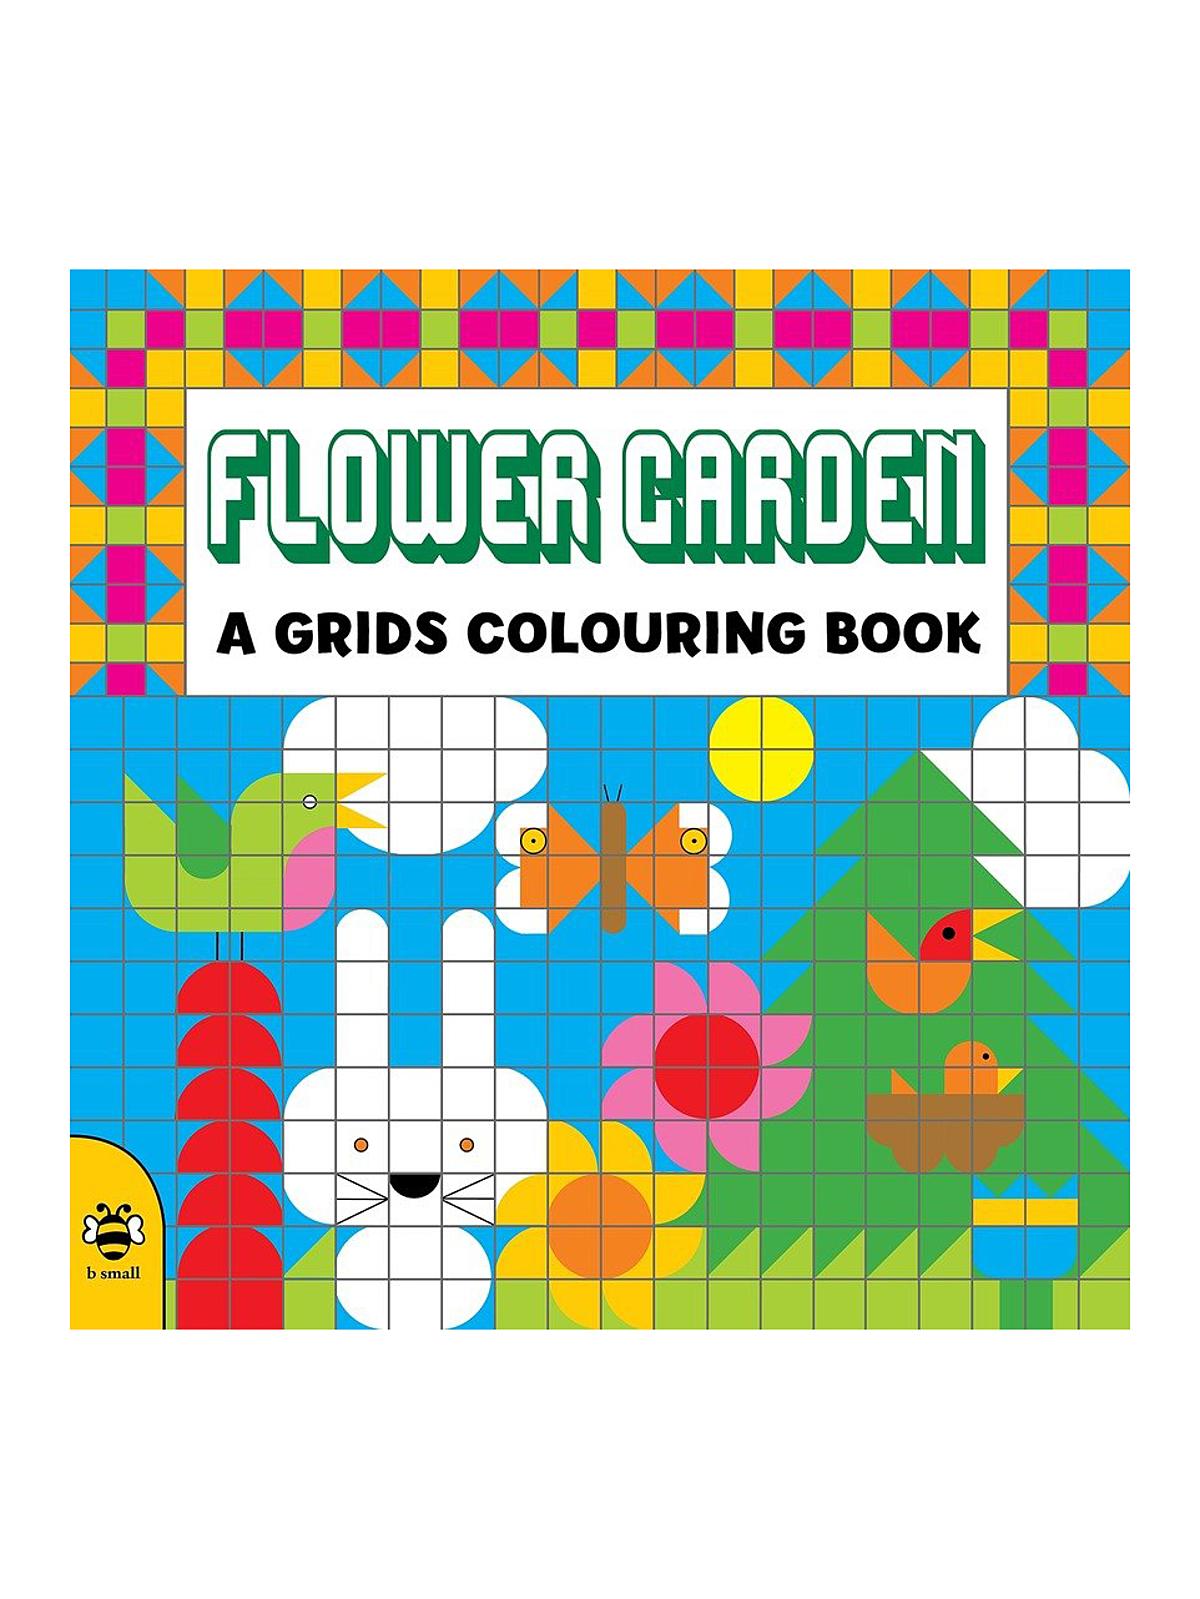 A Grids Colouring Book Flower Garden